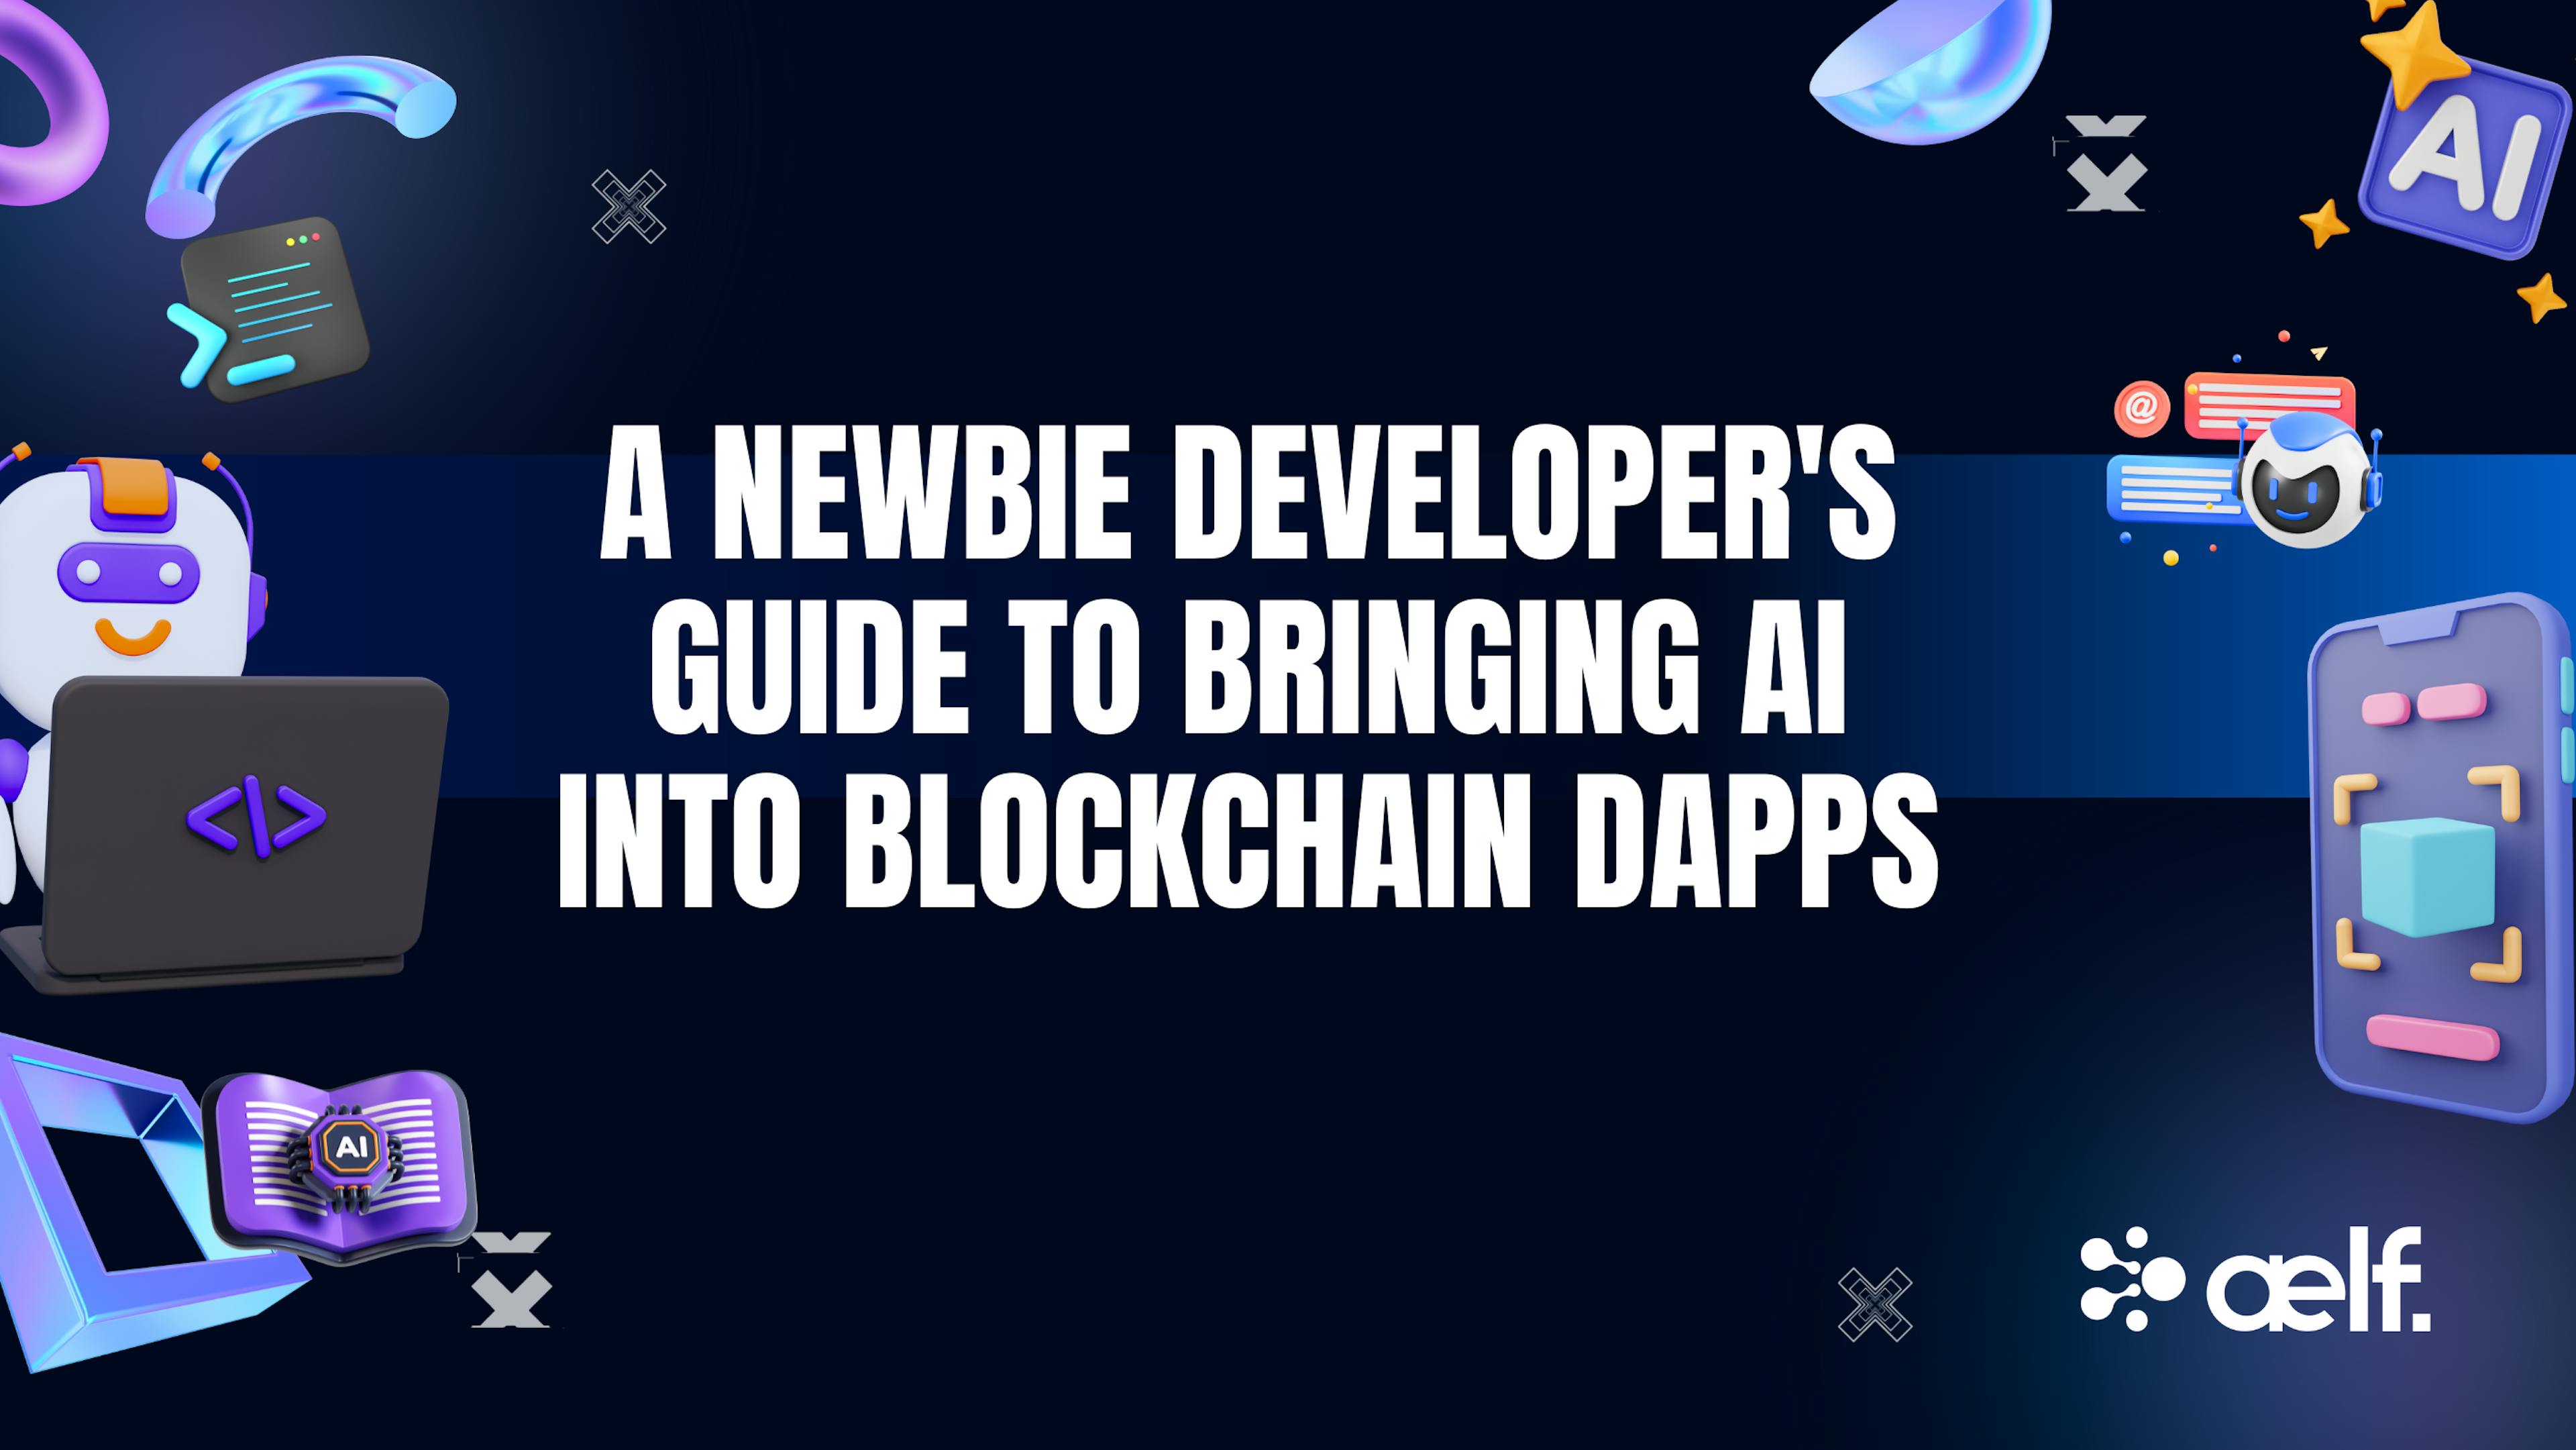 featured image - A Newbie Developer's Guide to Bringing AI Into Blockchain dApps